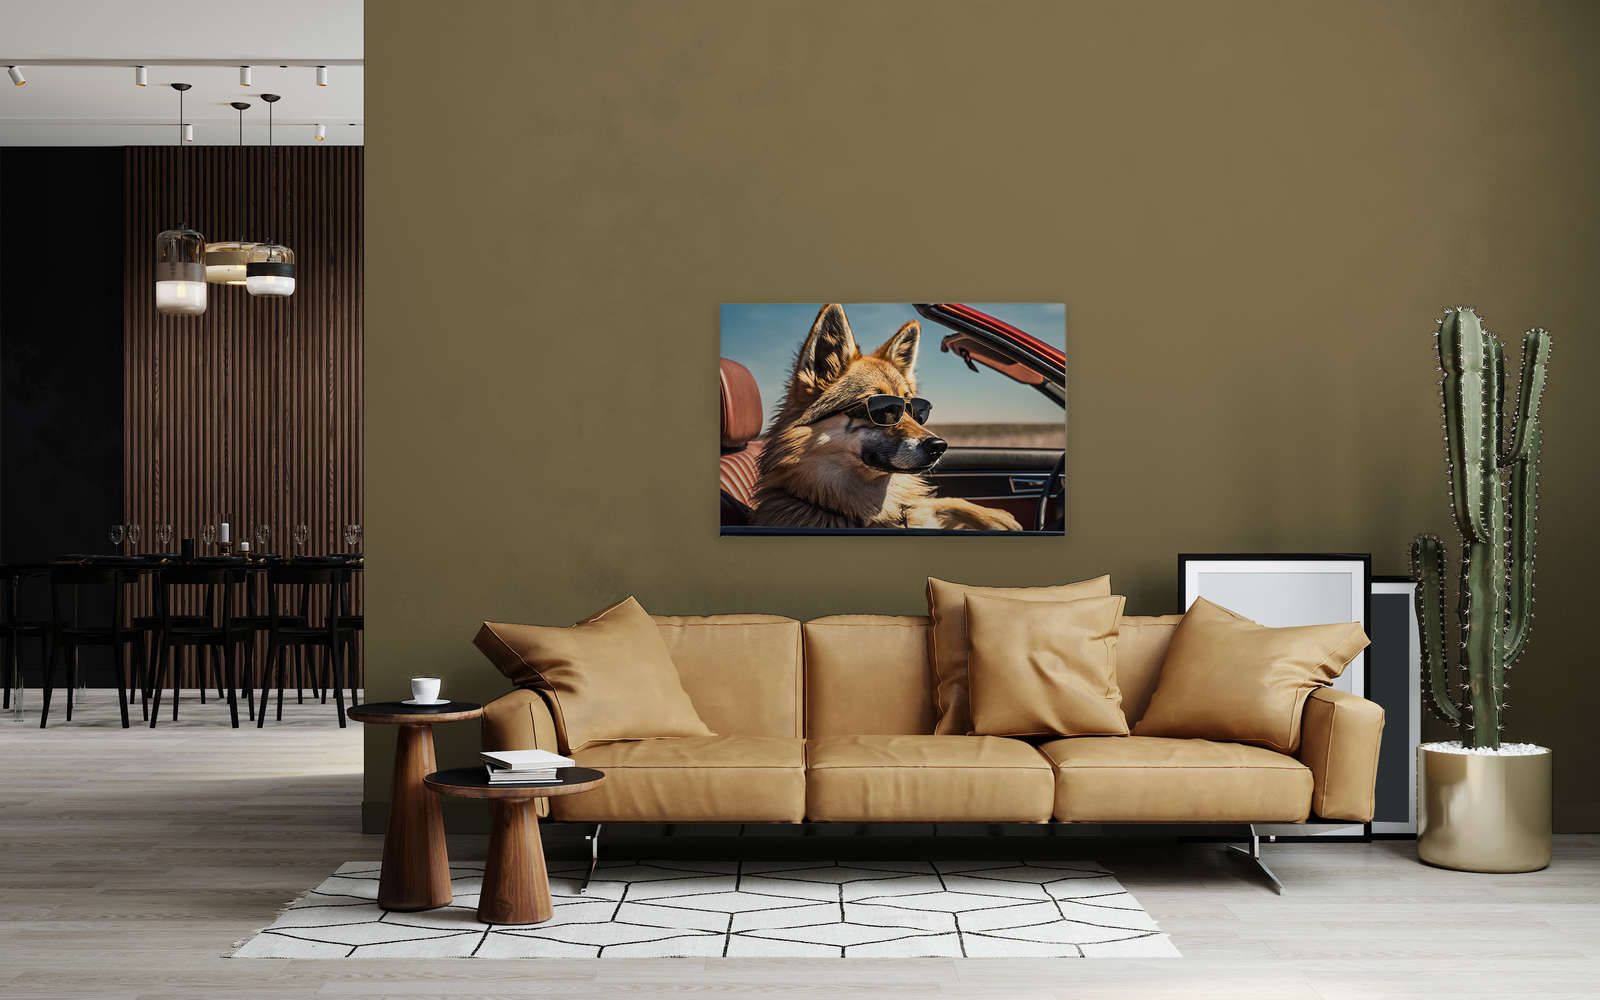             KI canvas picture »crusing wolf« - 120 cm x 80 cm
        